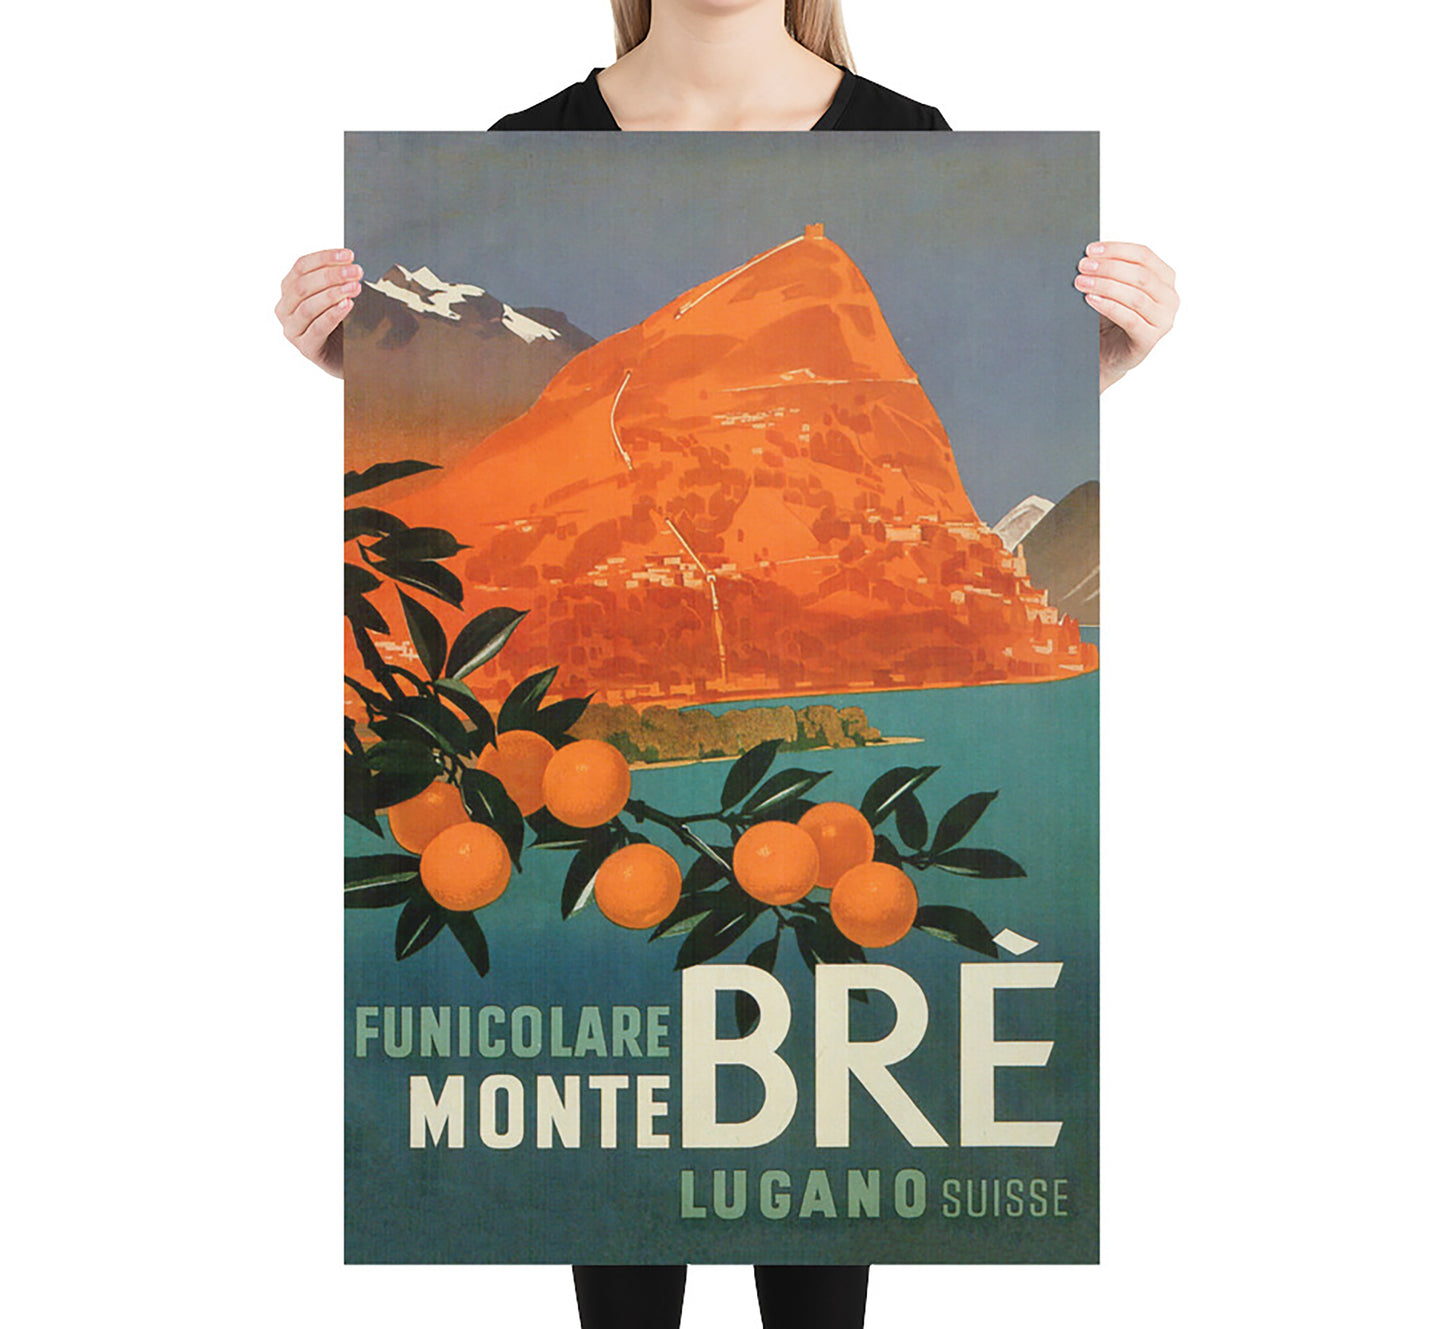 Funicular Monte Bre Lugano Lake, Switzerland vintage travel poster by unknown artist, c. 1930s.